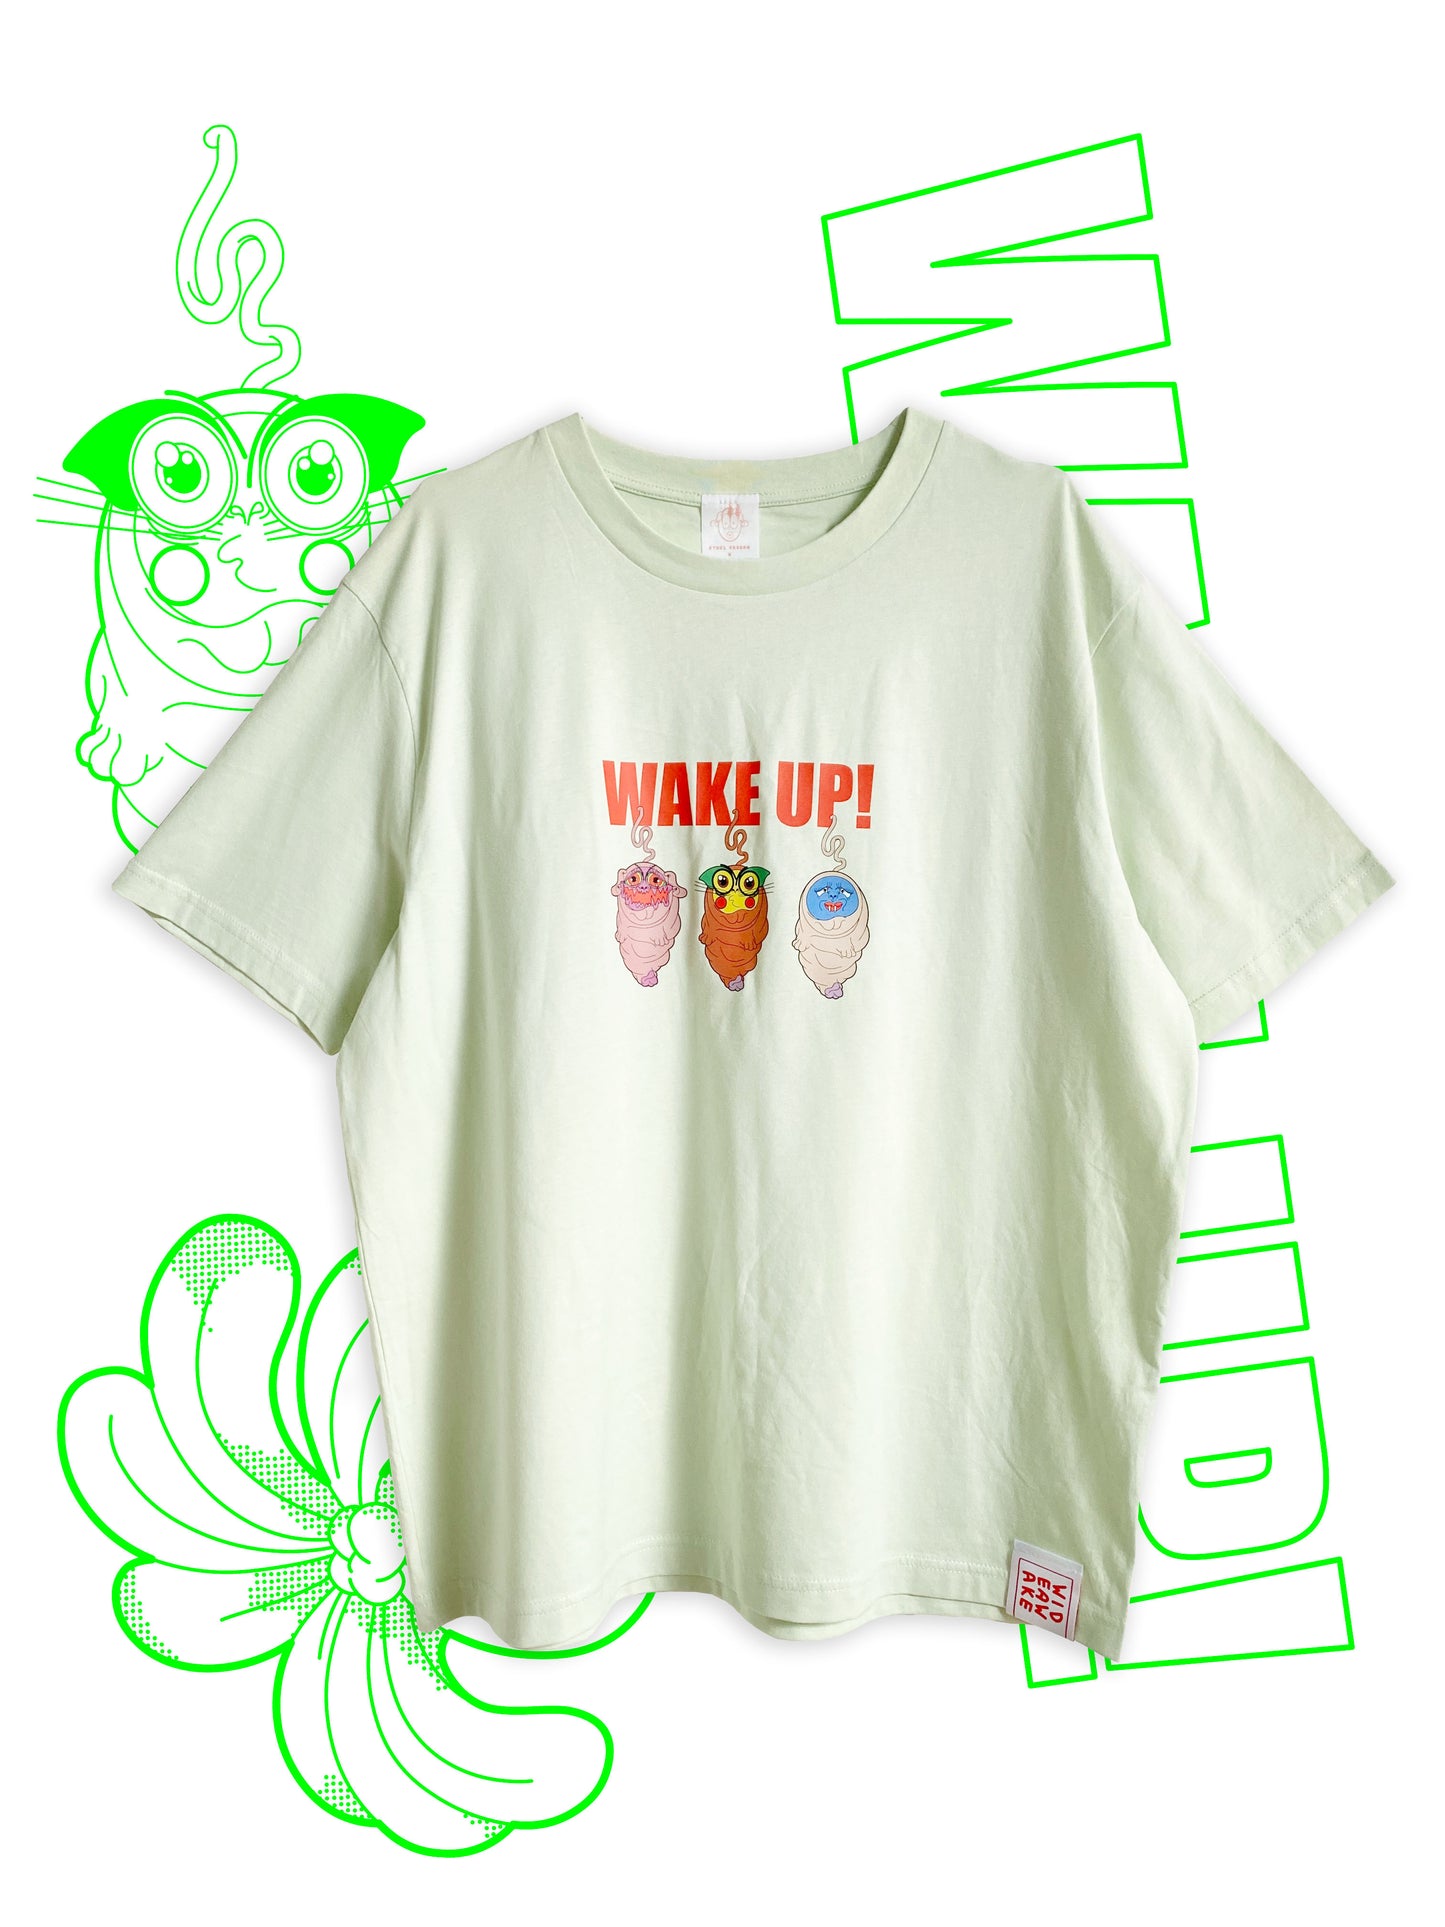 WAKE UP T-Shirt dizzy green